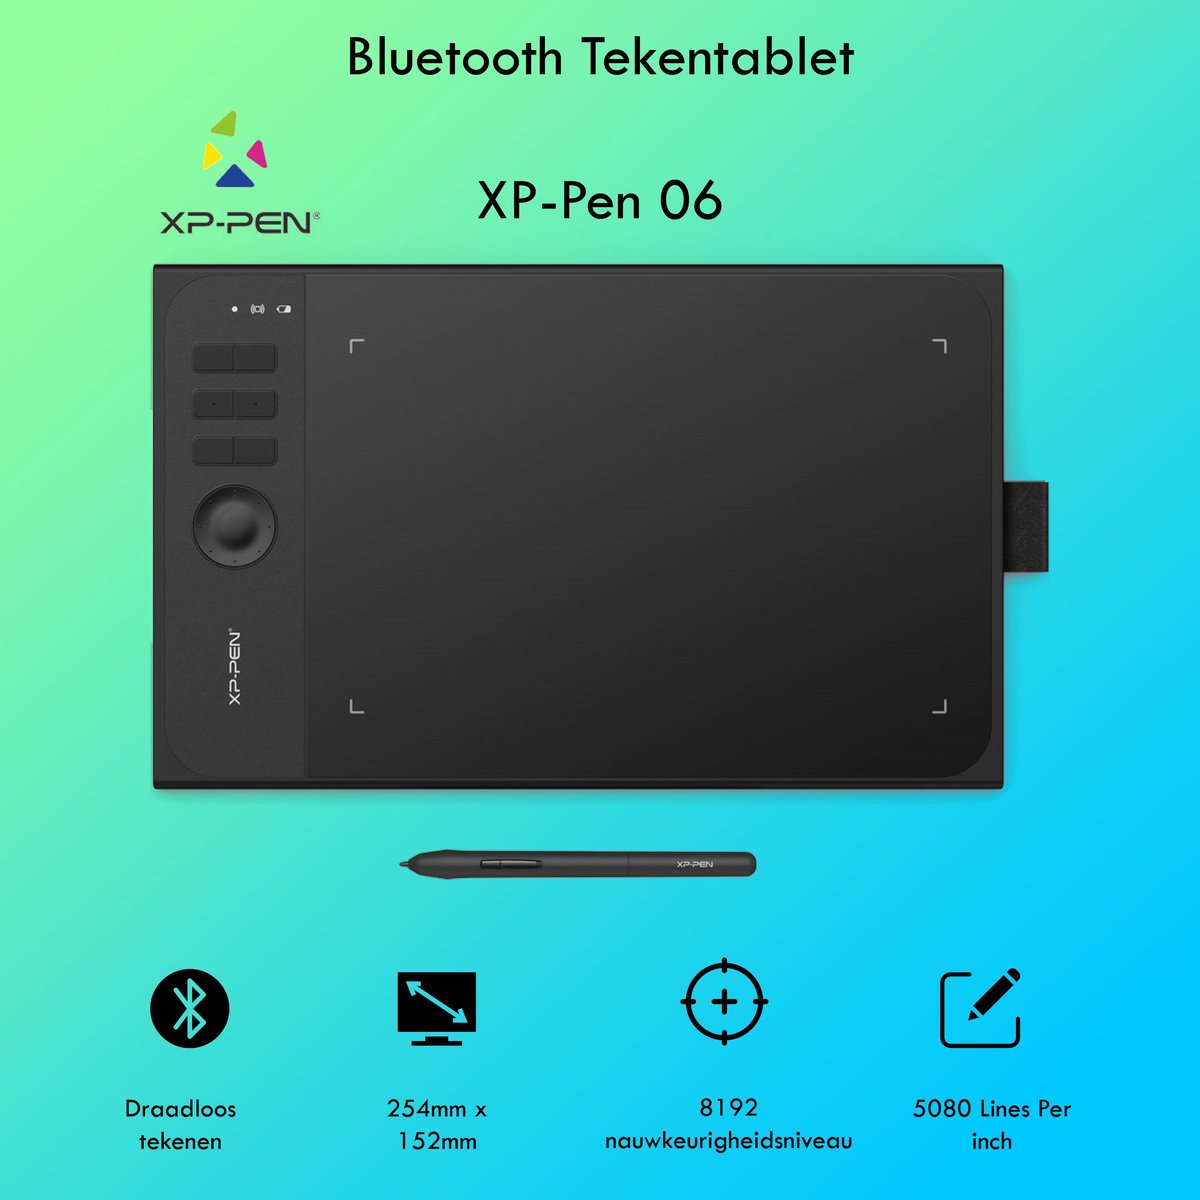 Teken Tablet - Tekentablet - Professioneel - 254mm x 152mm - 5080 LPI - Bluetooth - XP-Pen